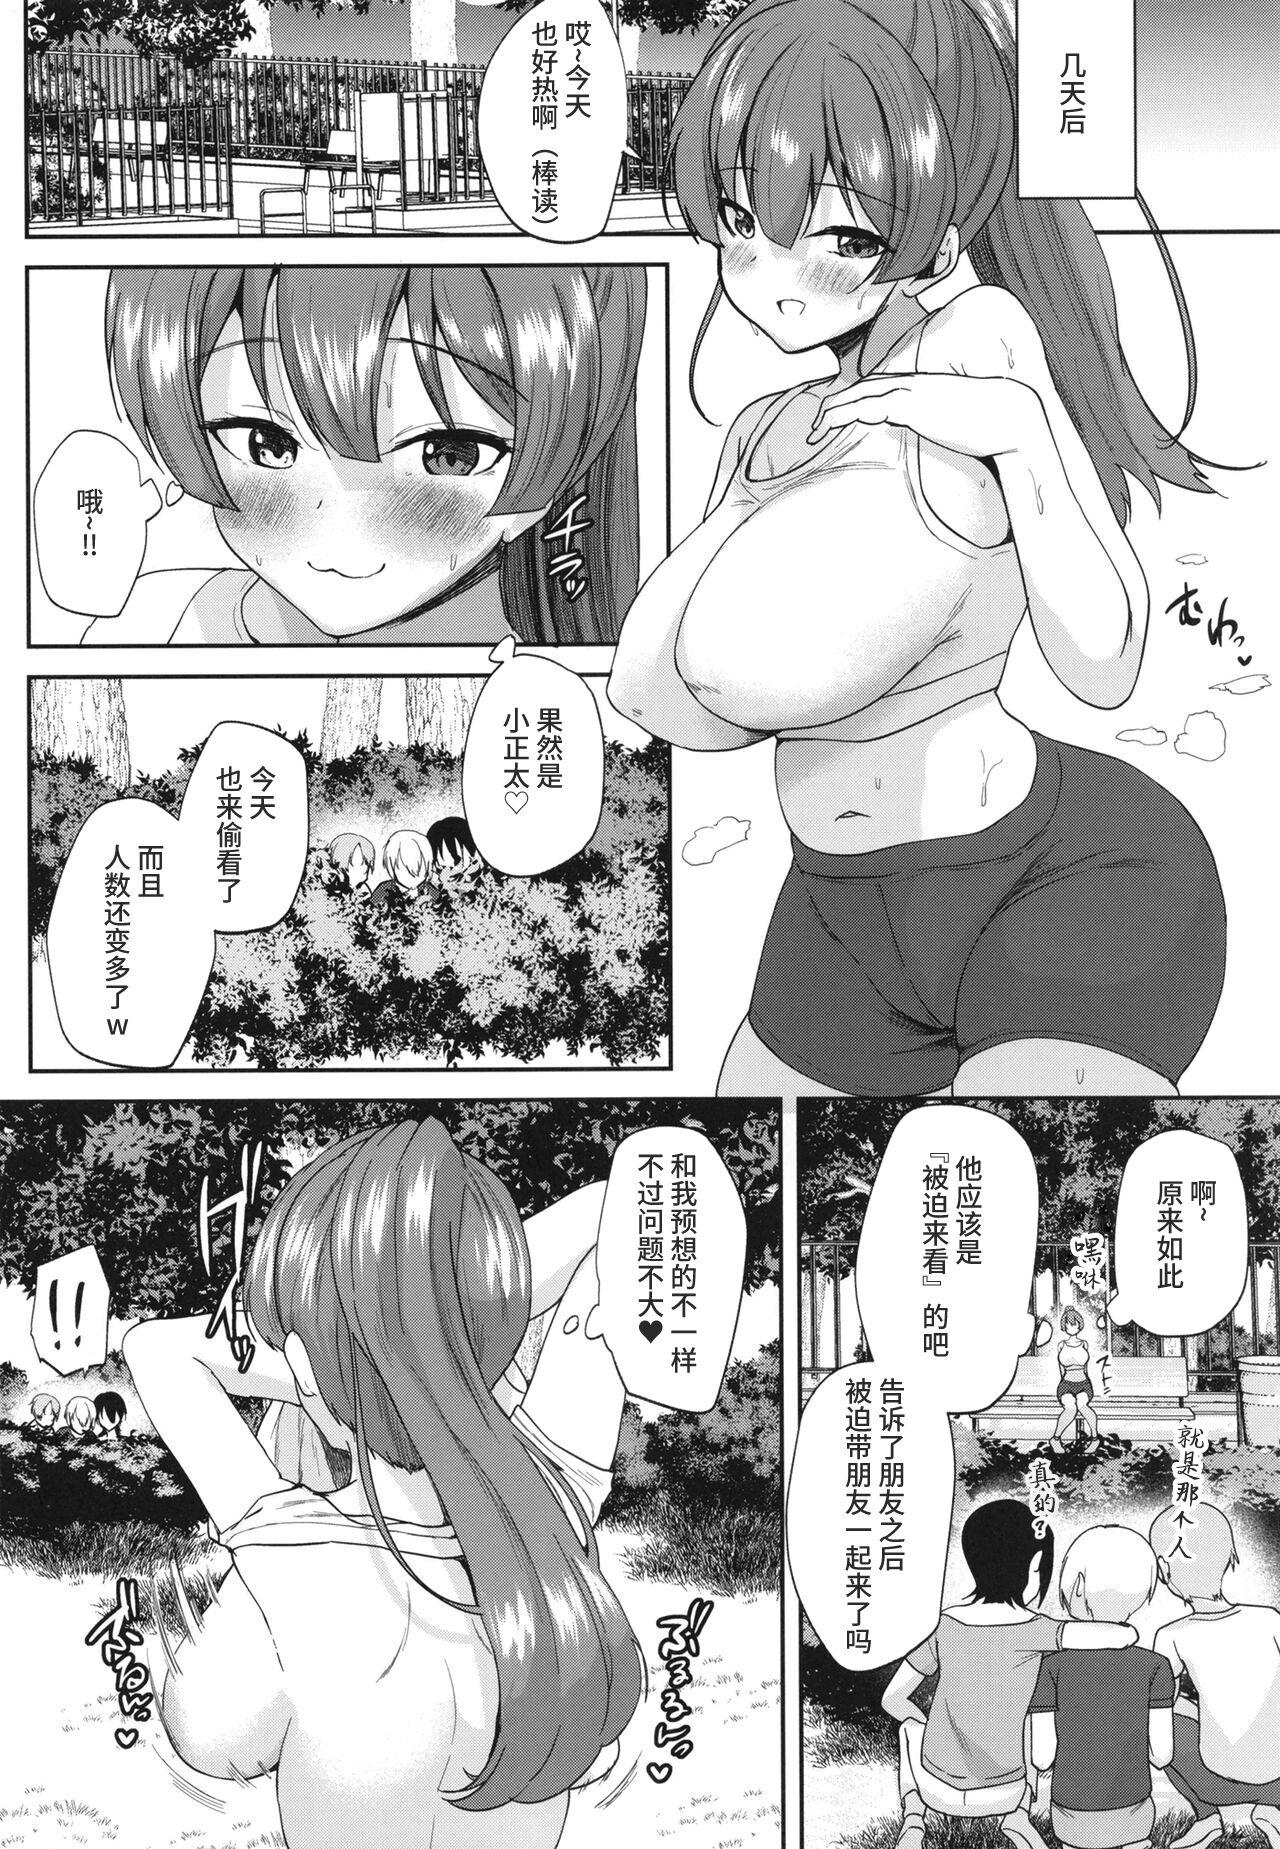 Sex Party Senchou no Ecchi Manga - Hololive Girls Getting Fucked - Page 8